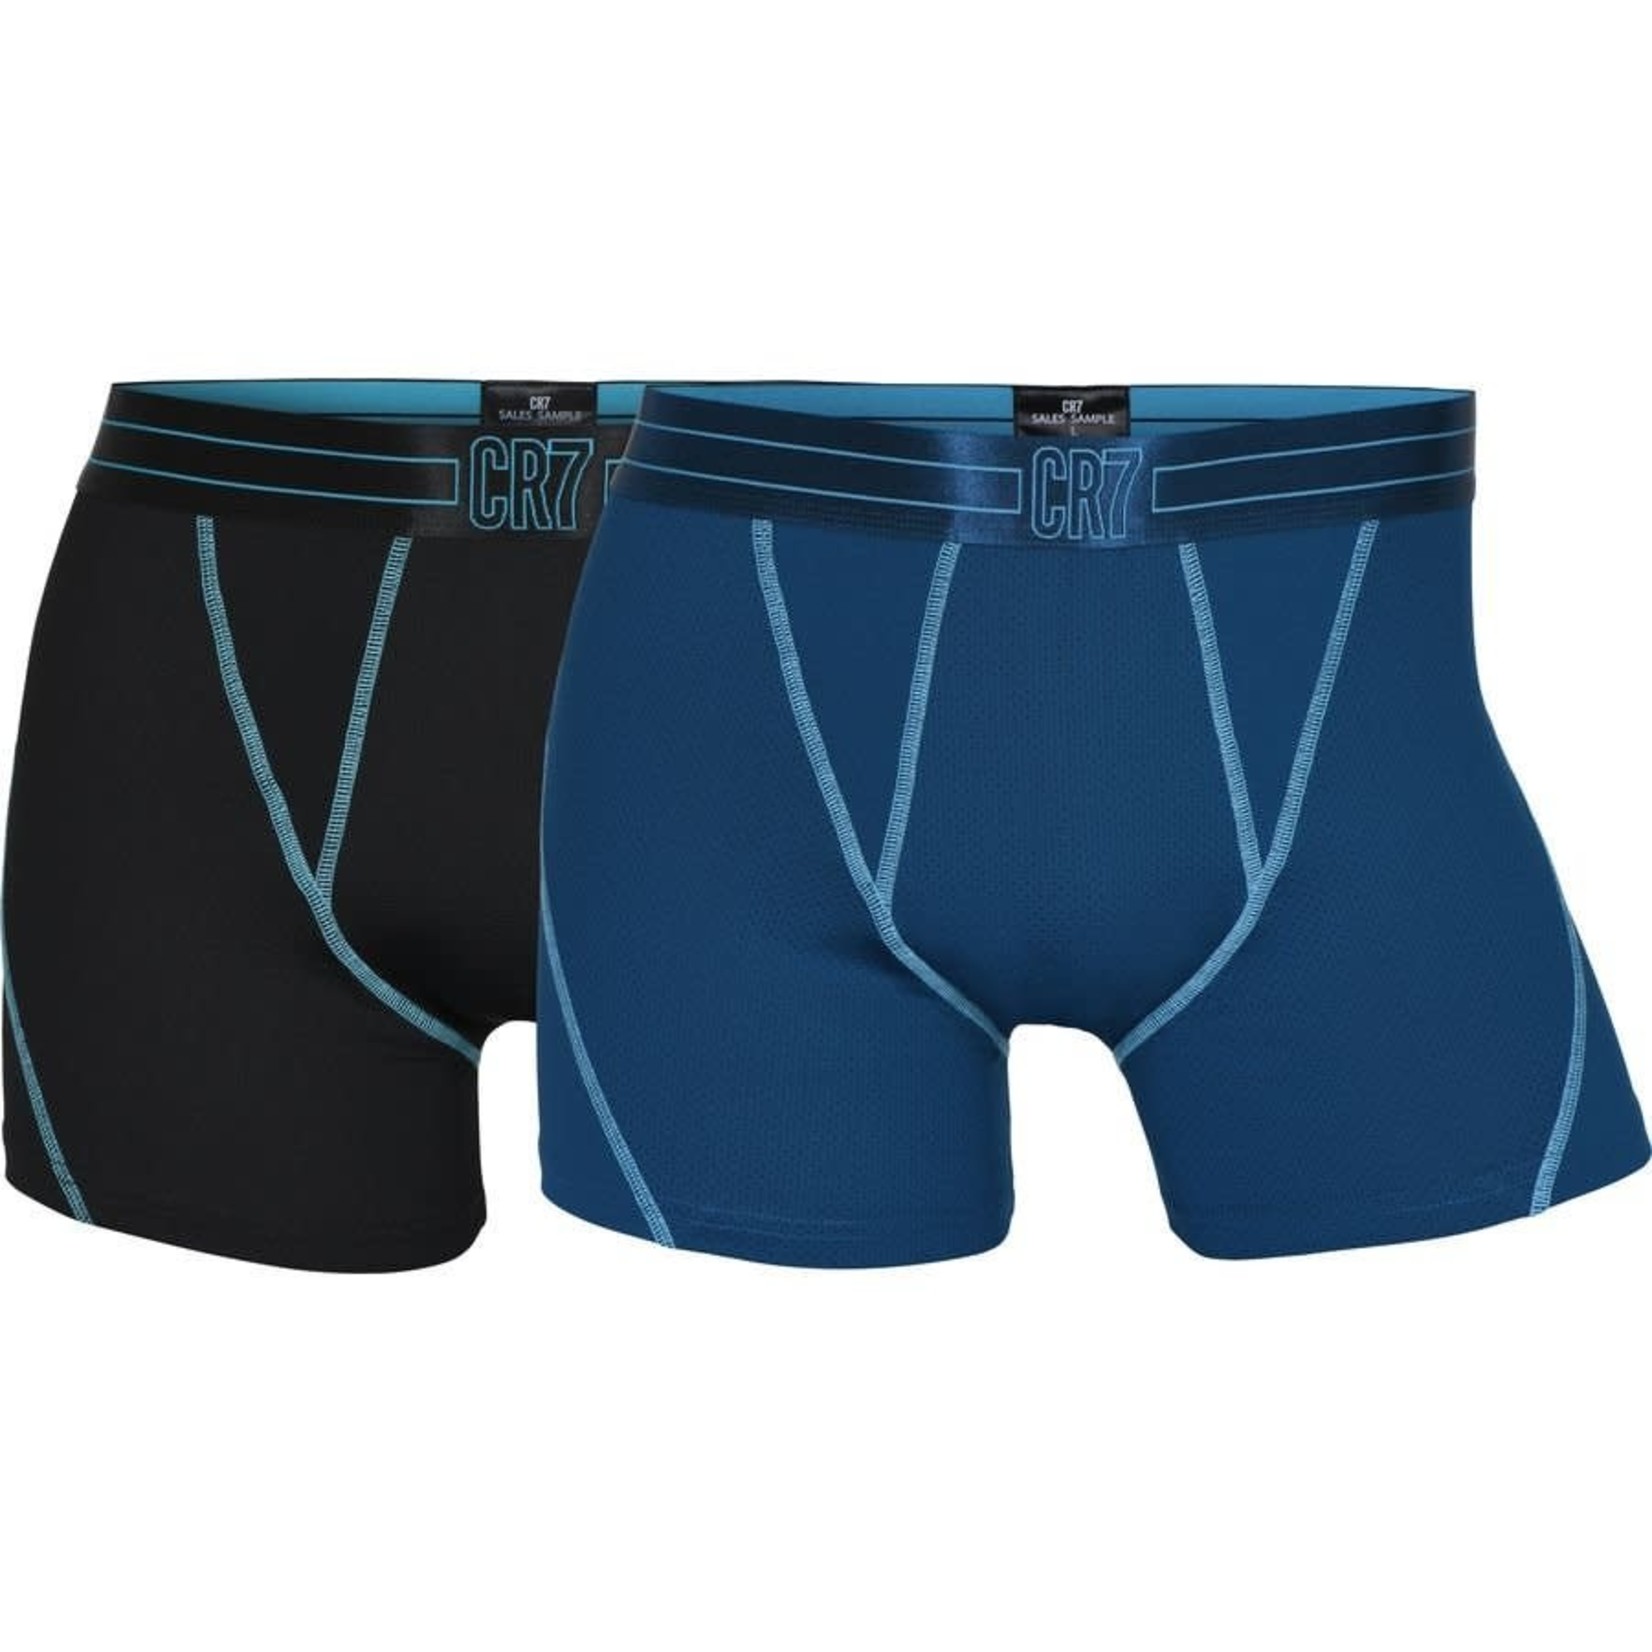 CR7 Boxer Underwear 2-Pack - Black/Blue Adult